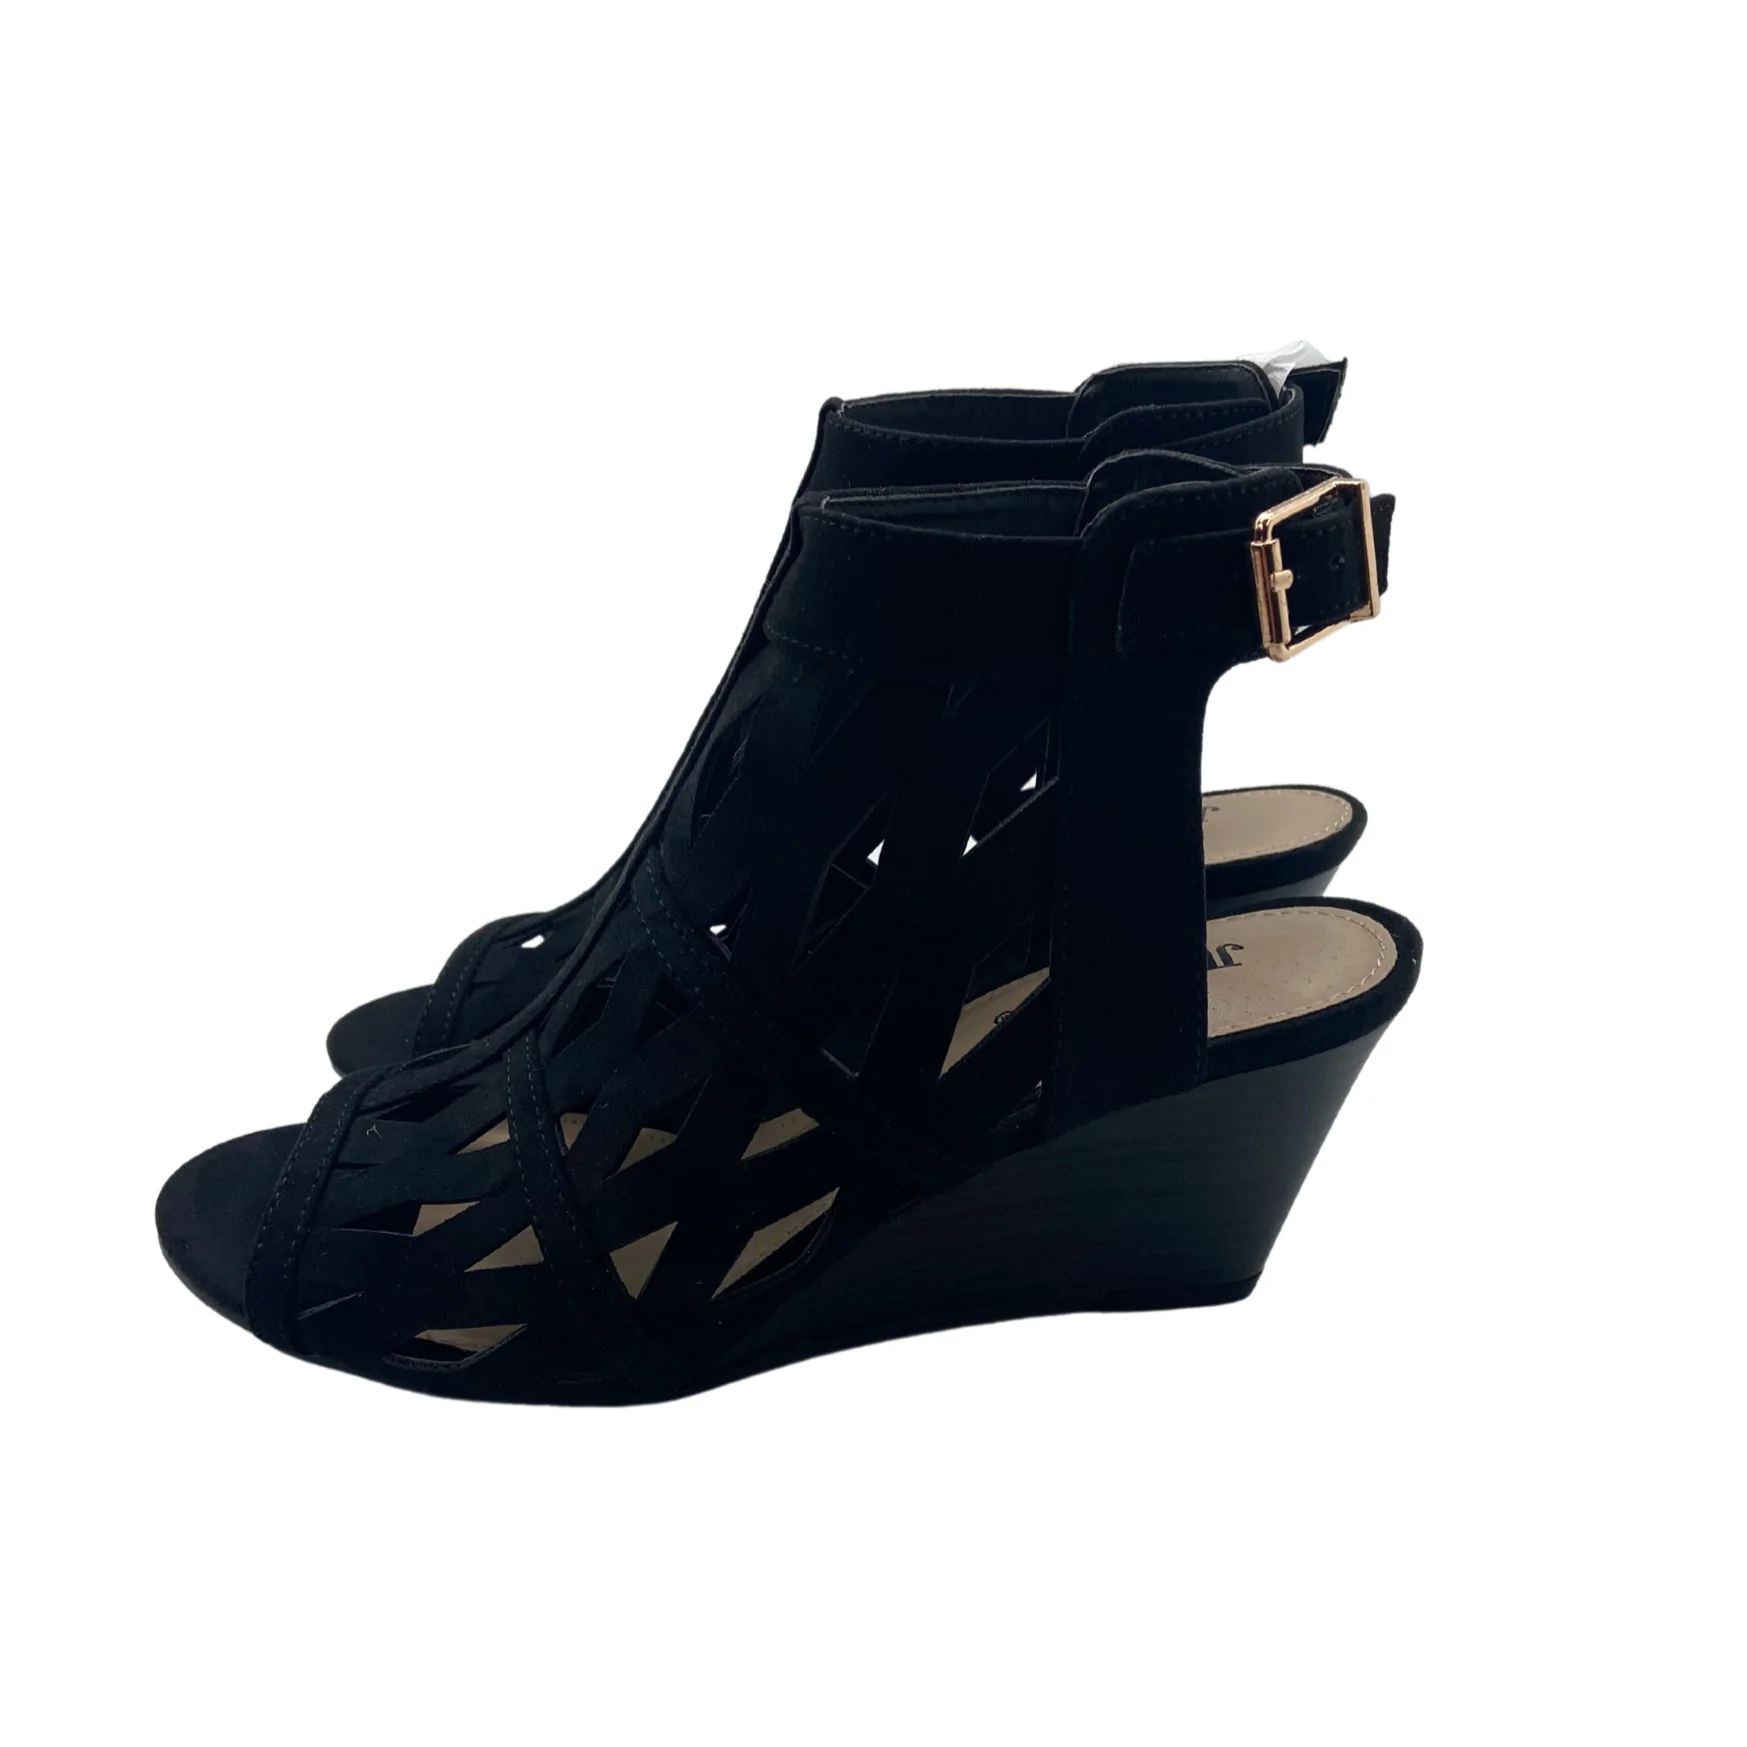 JustFab Women's Heels / Camilla / Black Wedge / 2.5" Heel / Size 6